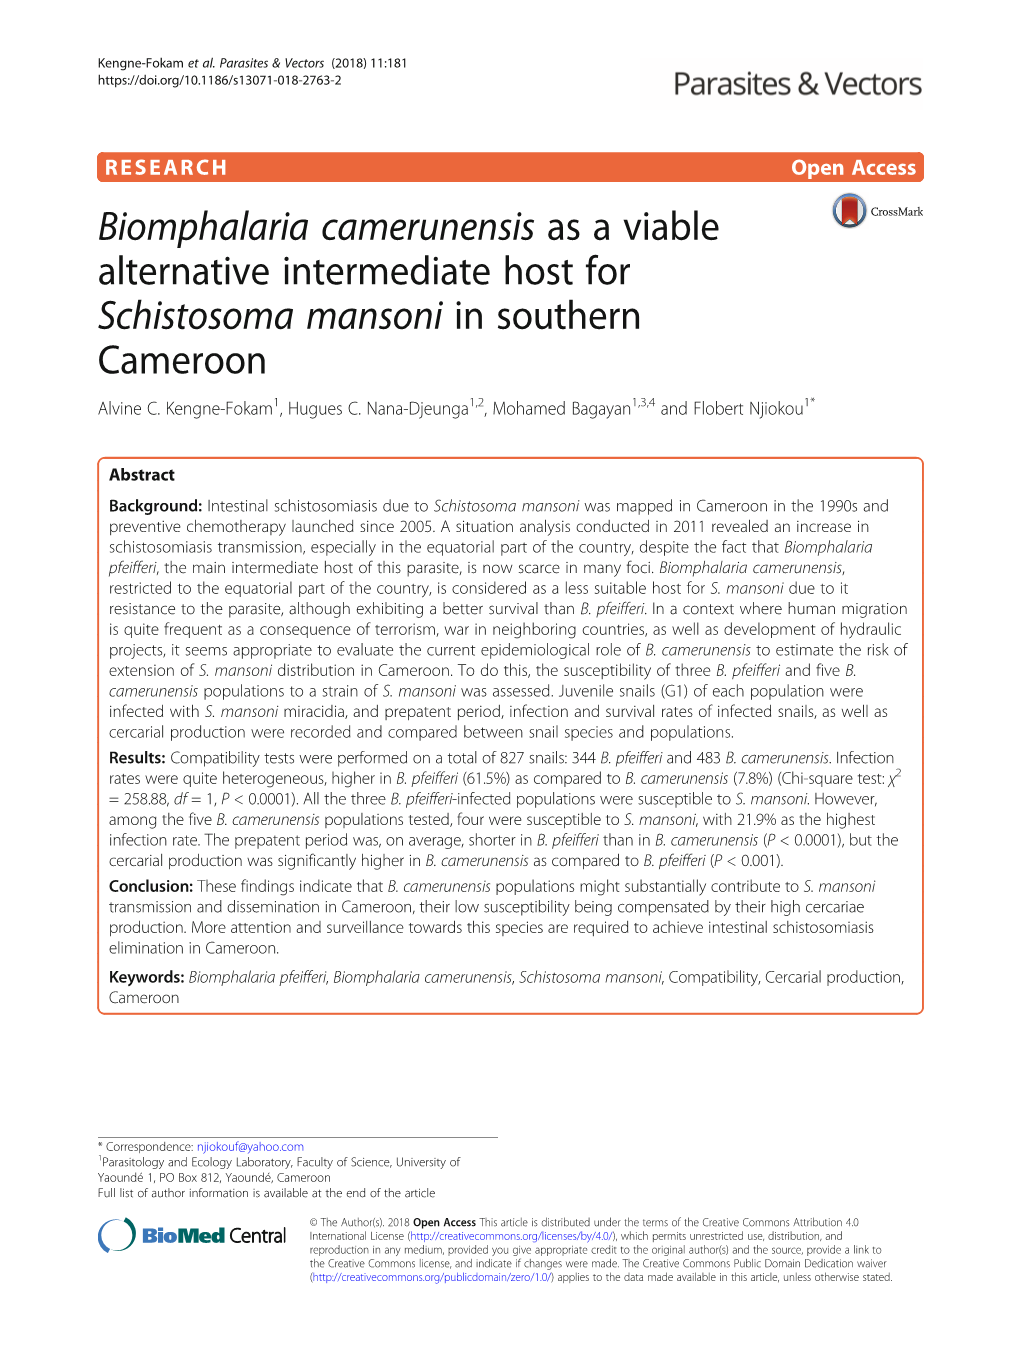 Biomphalaria Camerunensis As a Viable Alternative Intermediate Host for Schistosoma Mansoni in Southern Cameroon Alvine C